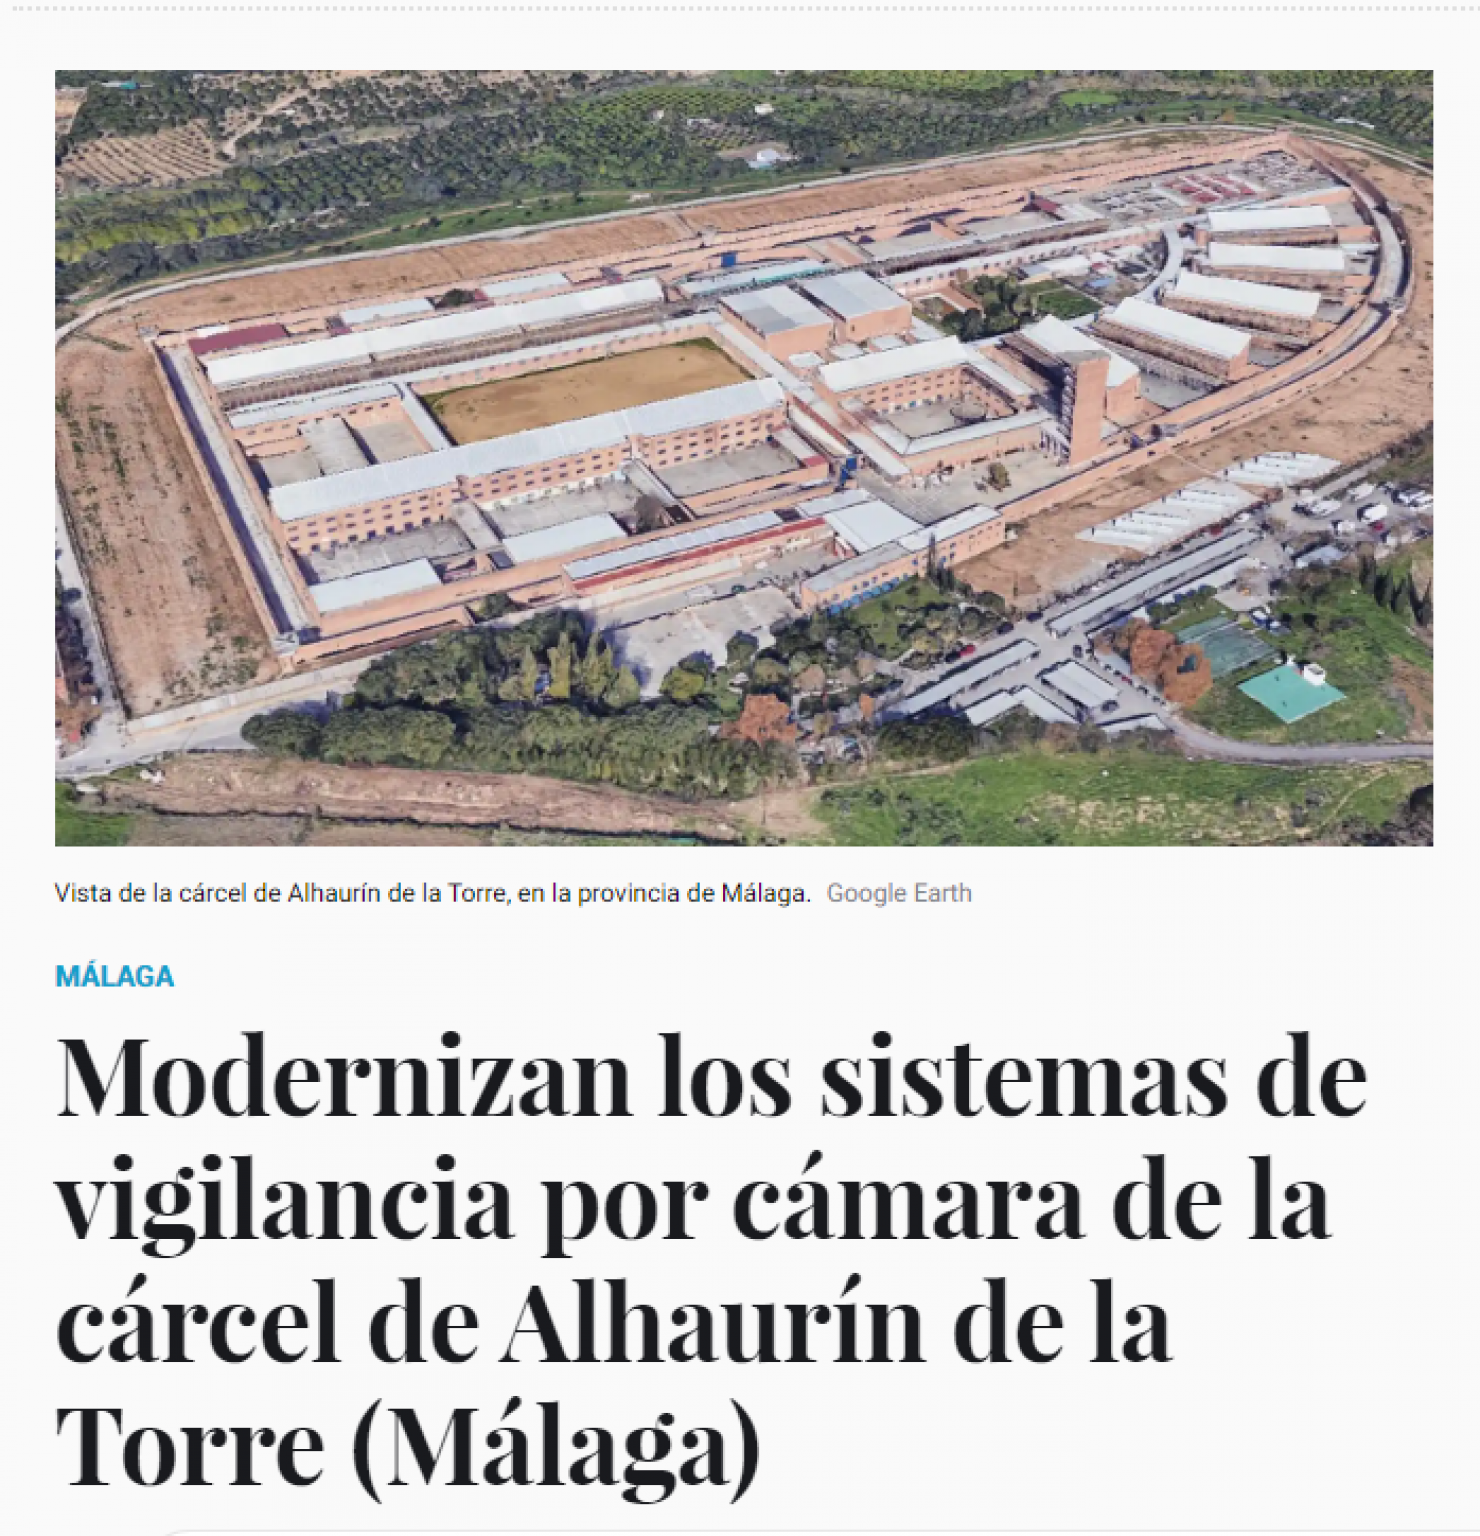 The camera surveillance systems of the Alhaurín de la Torre prison (Málaga) are modernized